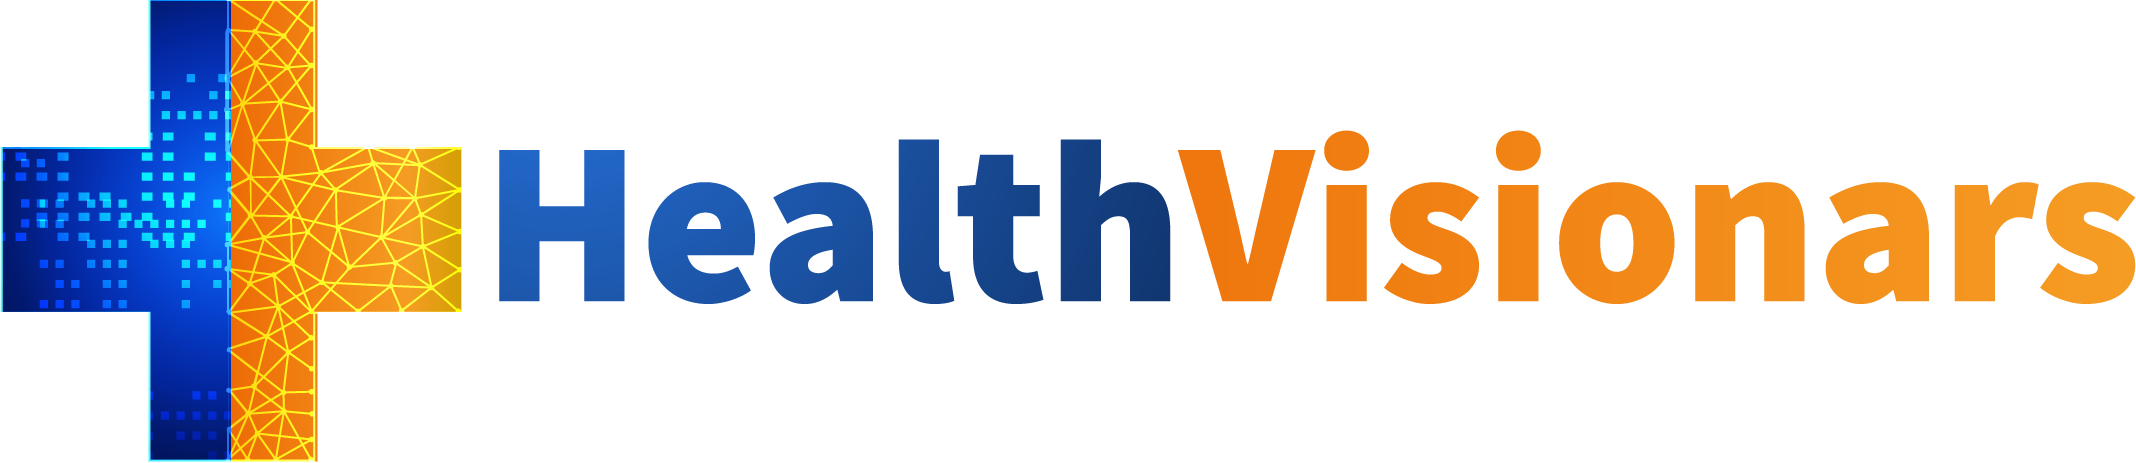 healthvisionars.net